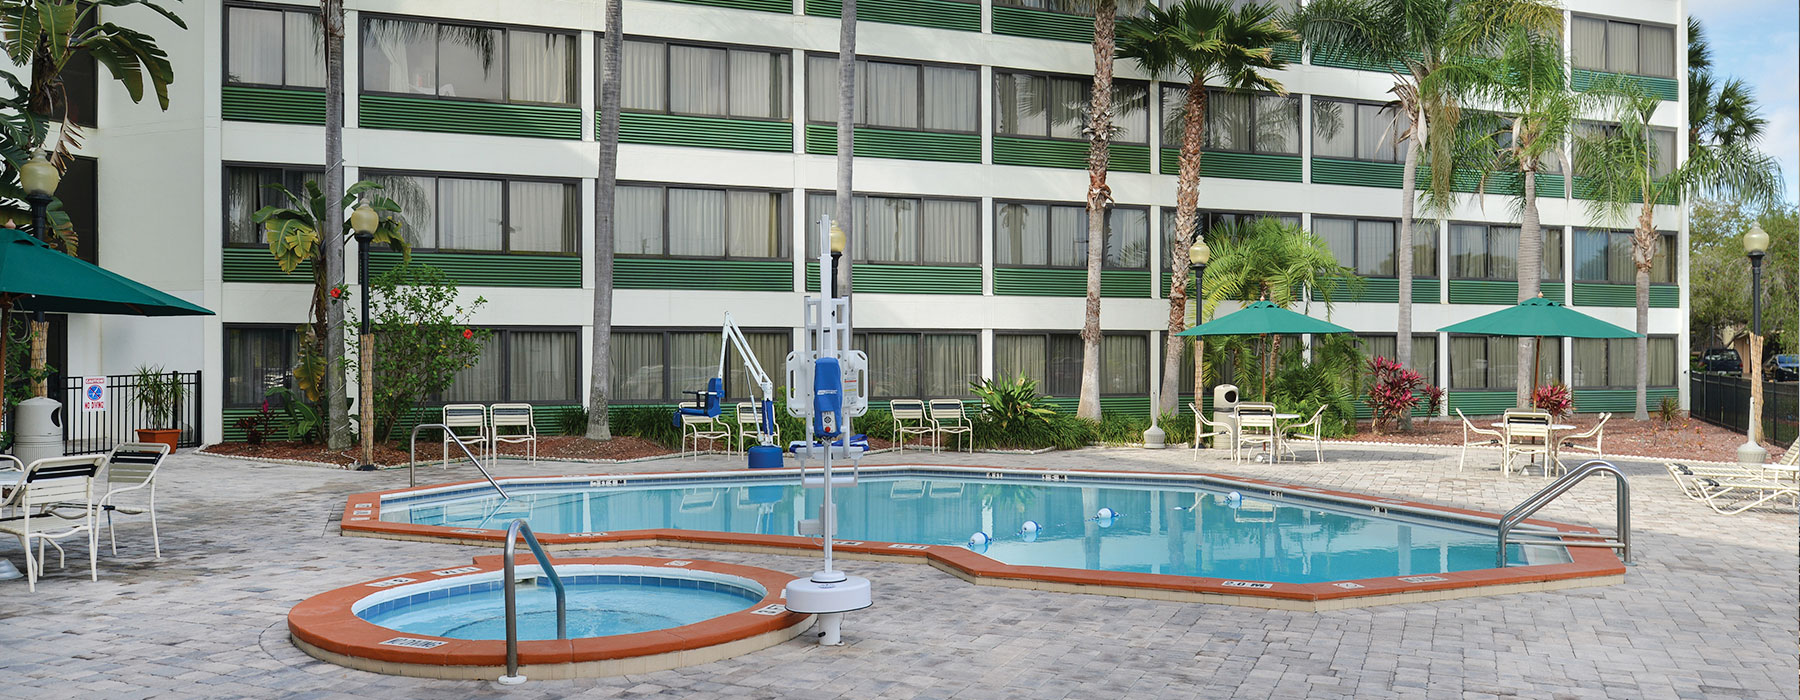 Hotel Amenities - Outdoor Pool, Restaurant, near PIE